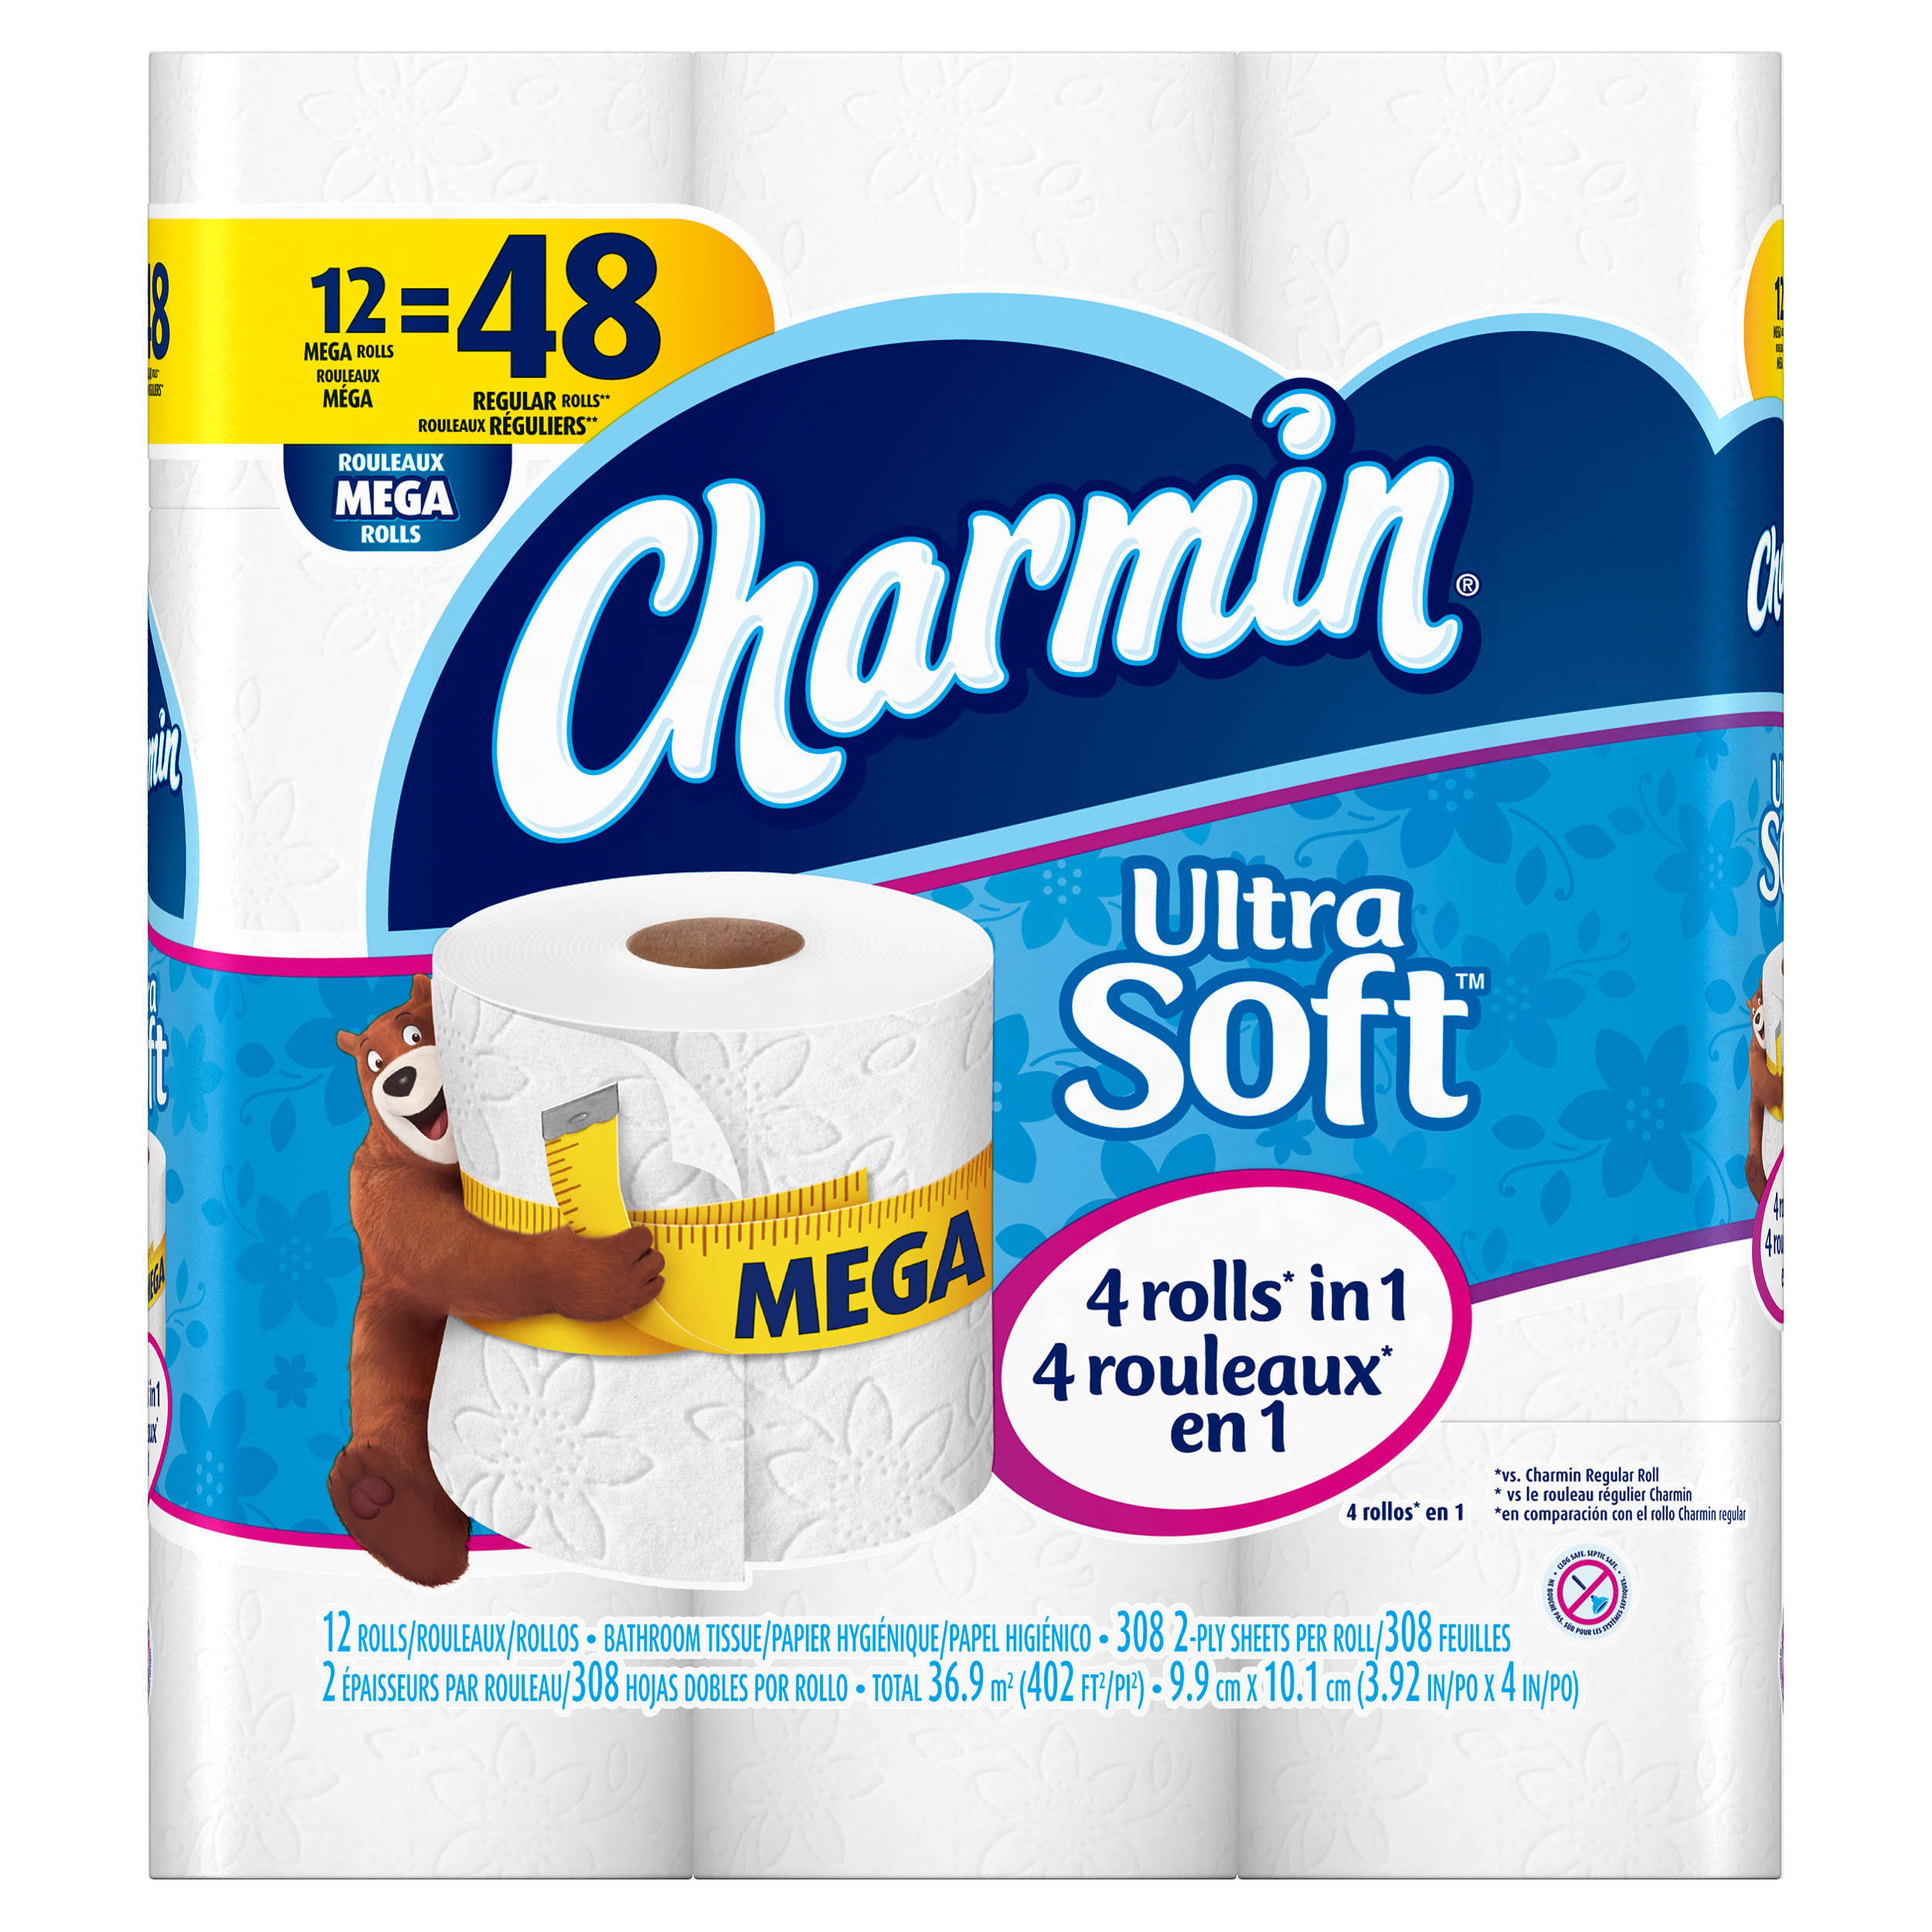 Charmin Ultra Soft Toilet Paper 12 Mega Rolls (Pack of 1) - image 1 of 6